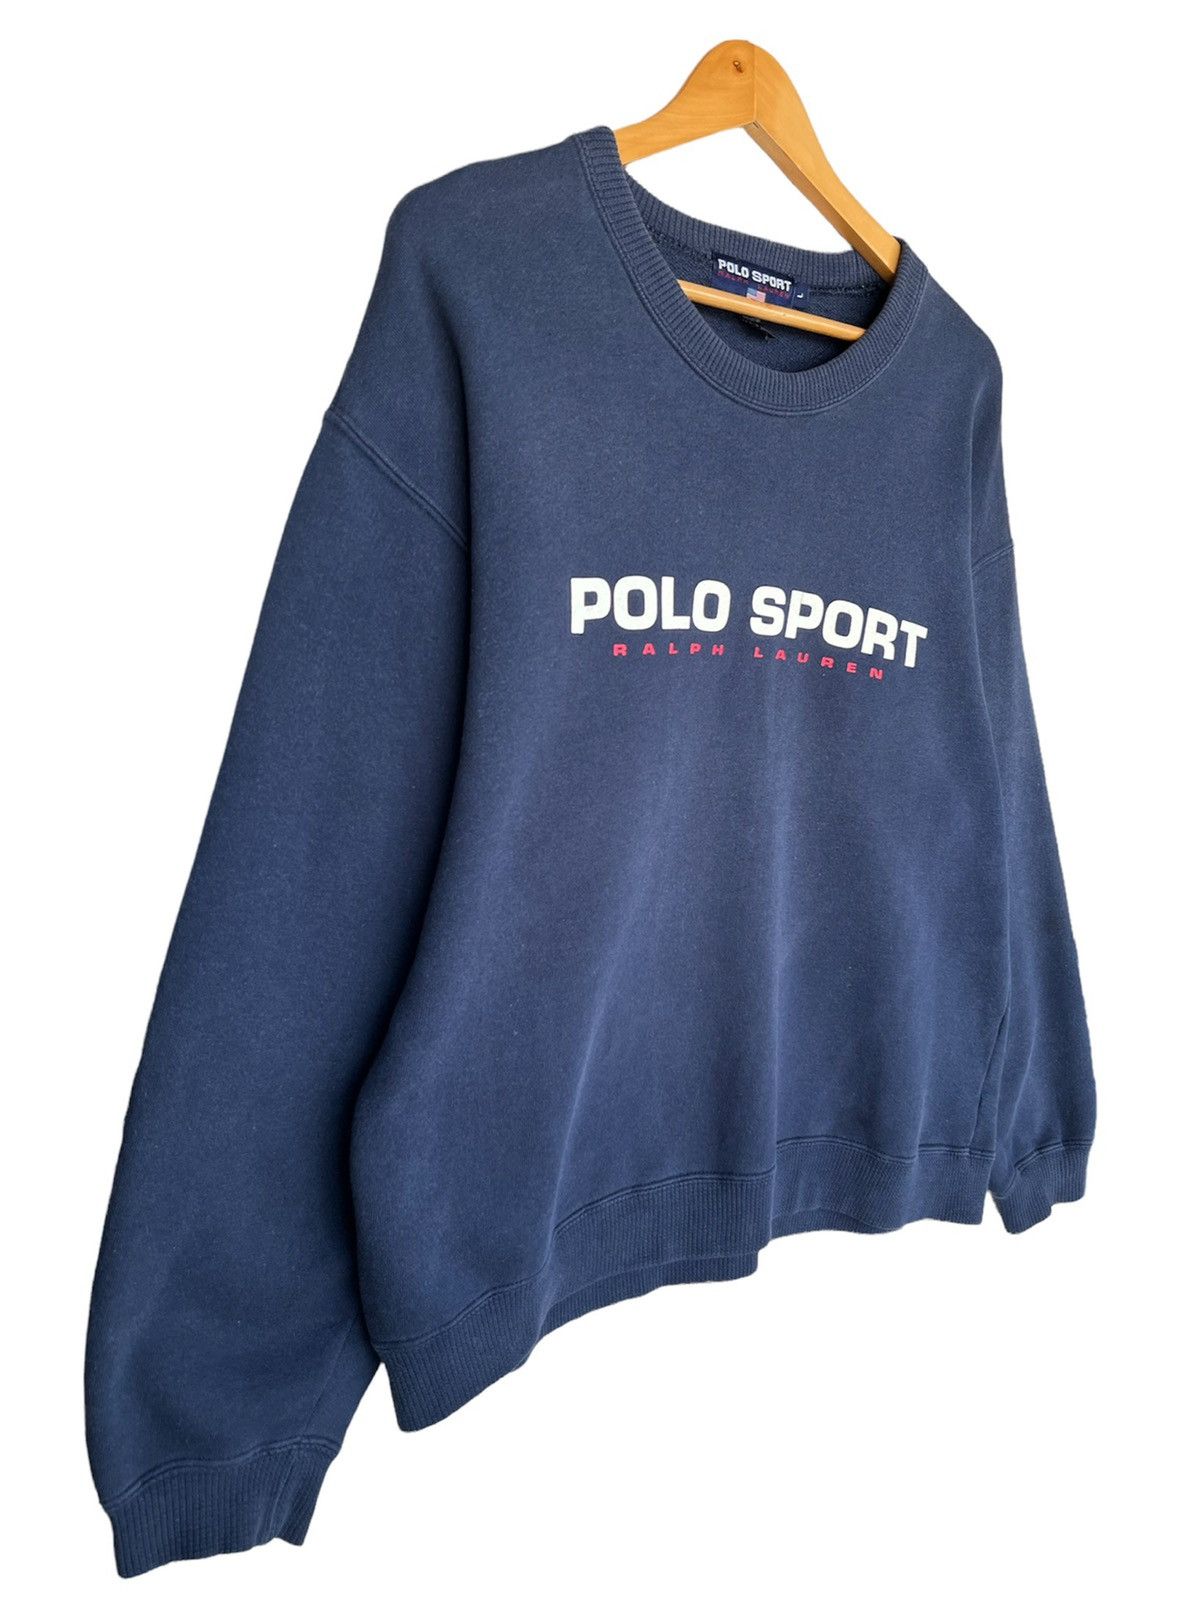 Polo Ralph Lauren - Vintage Polo Sport Ralph Lauren Spellout Sweatshirt Large - 3